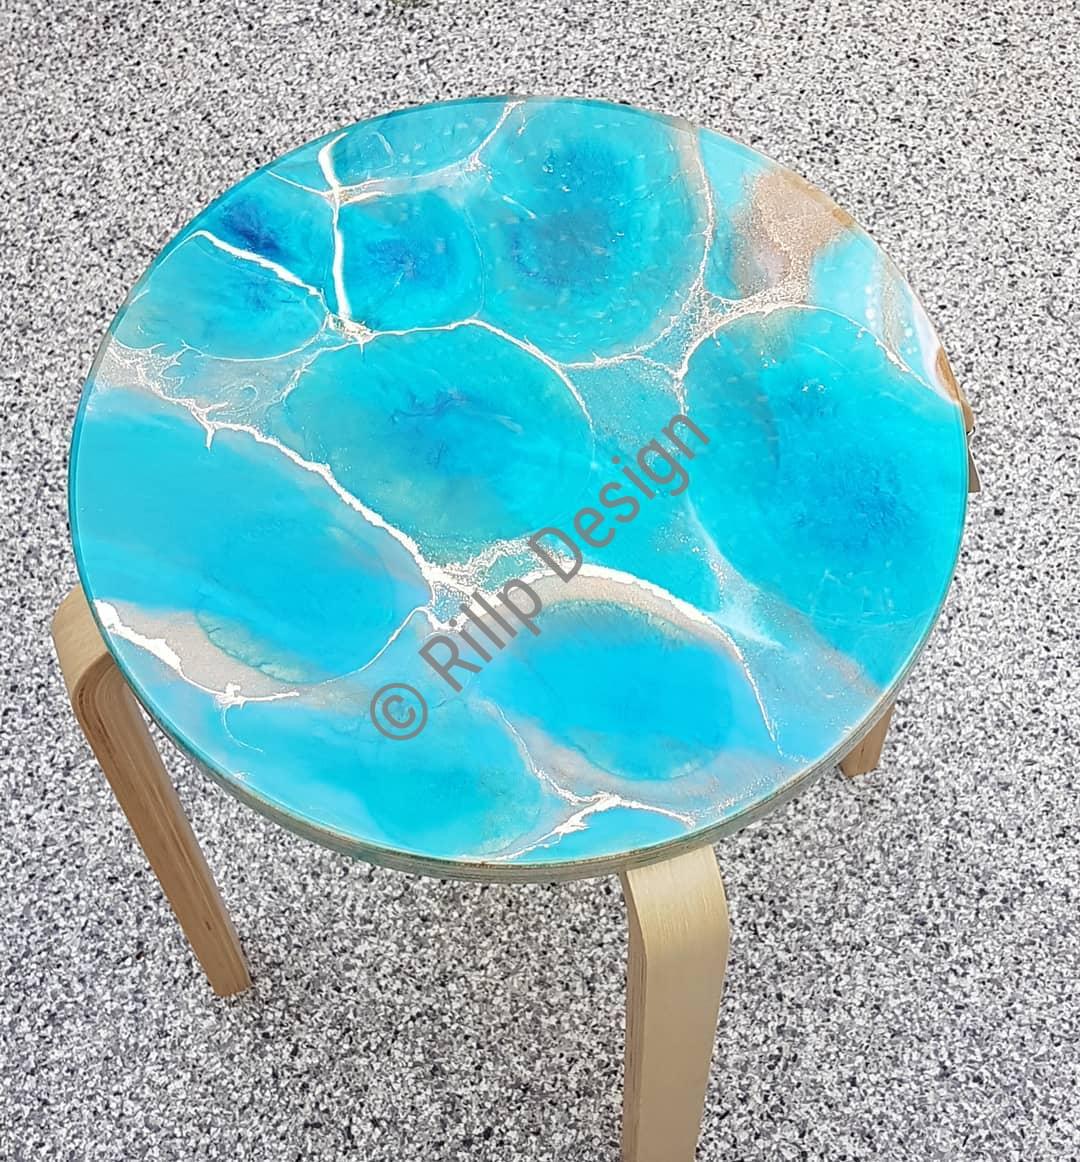 Ocean Blue sidetable/stool available now